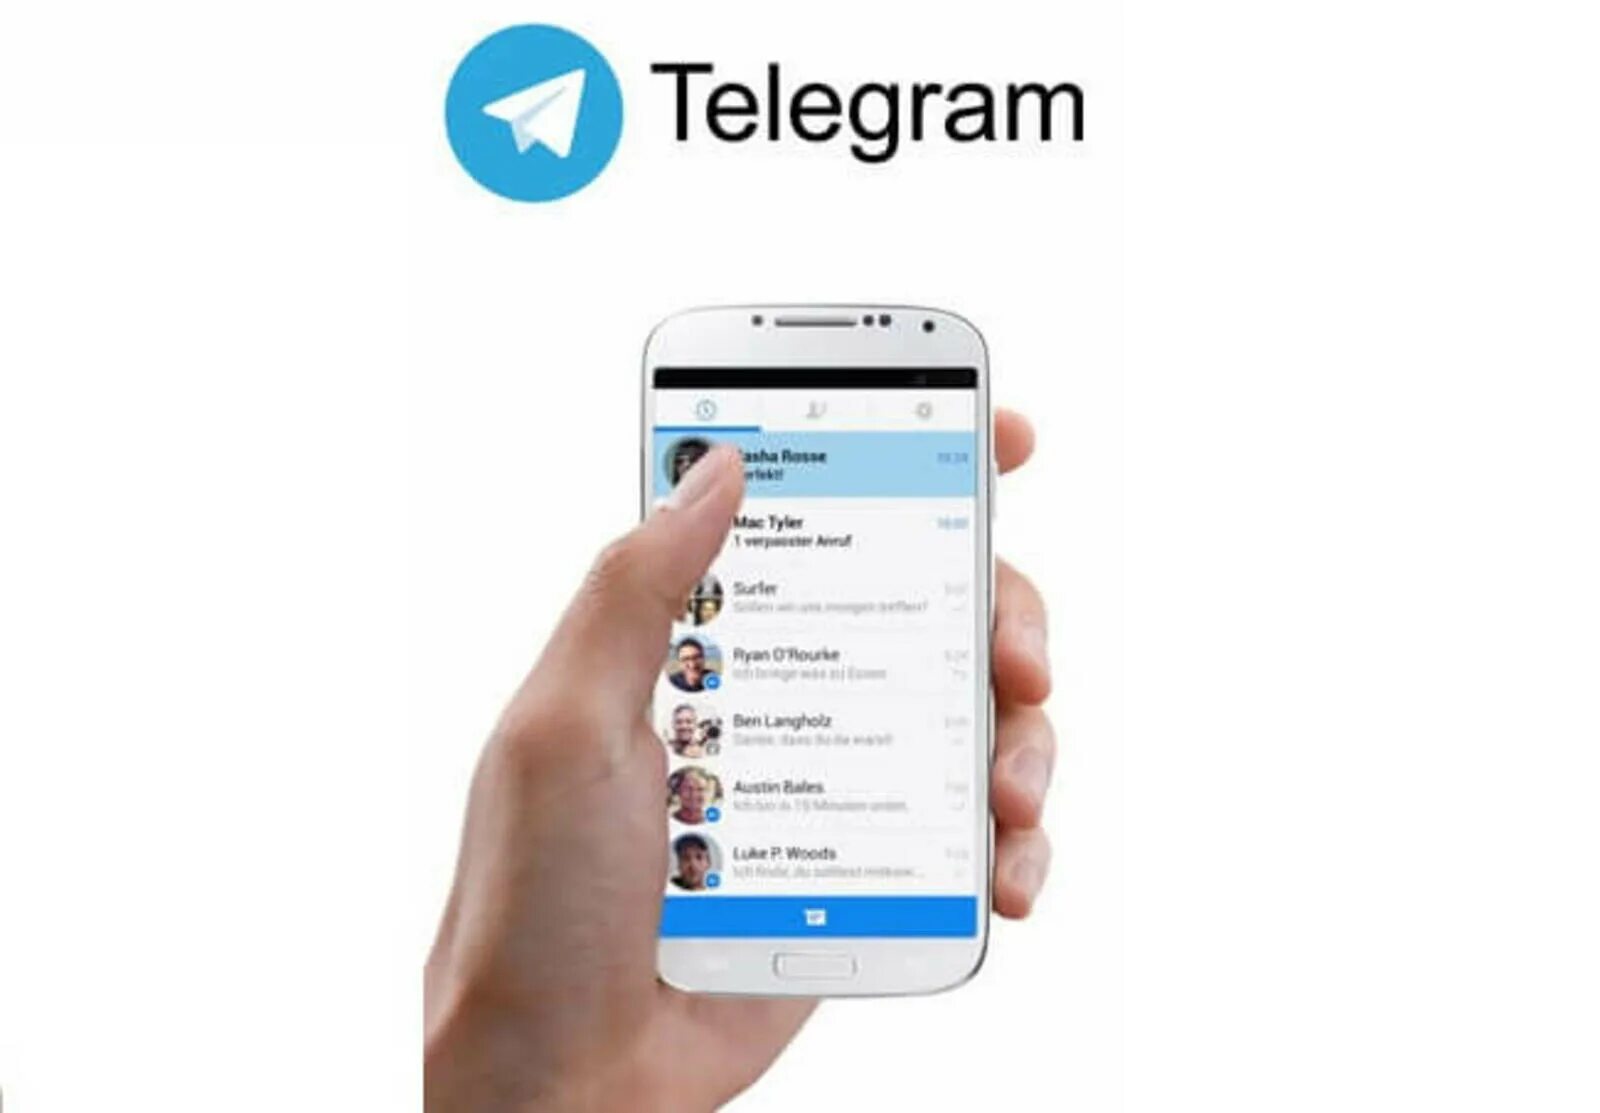 В моем телефоне телеграм. Телеграм в телефоне. Телефон в руке телеграм. Смартфон с телеграмм. Телефон в руке с Телеграмом.